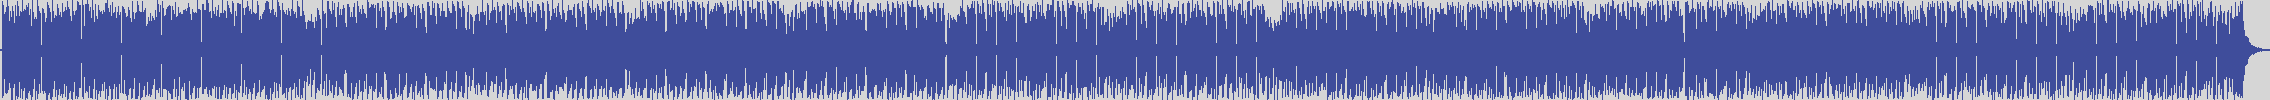 nf_boyz_records [NFY021] Norman Dias - Get the Power [Powa Mix] audio wave form